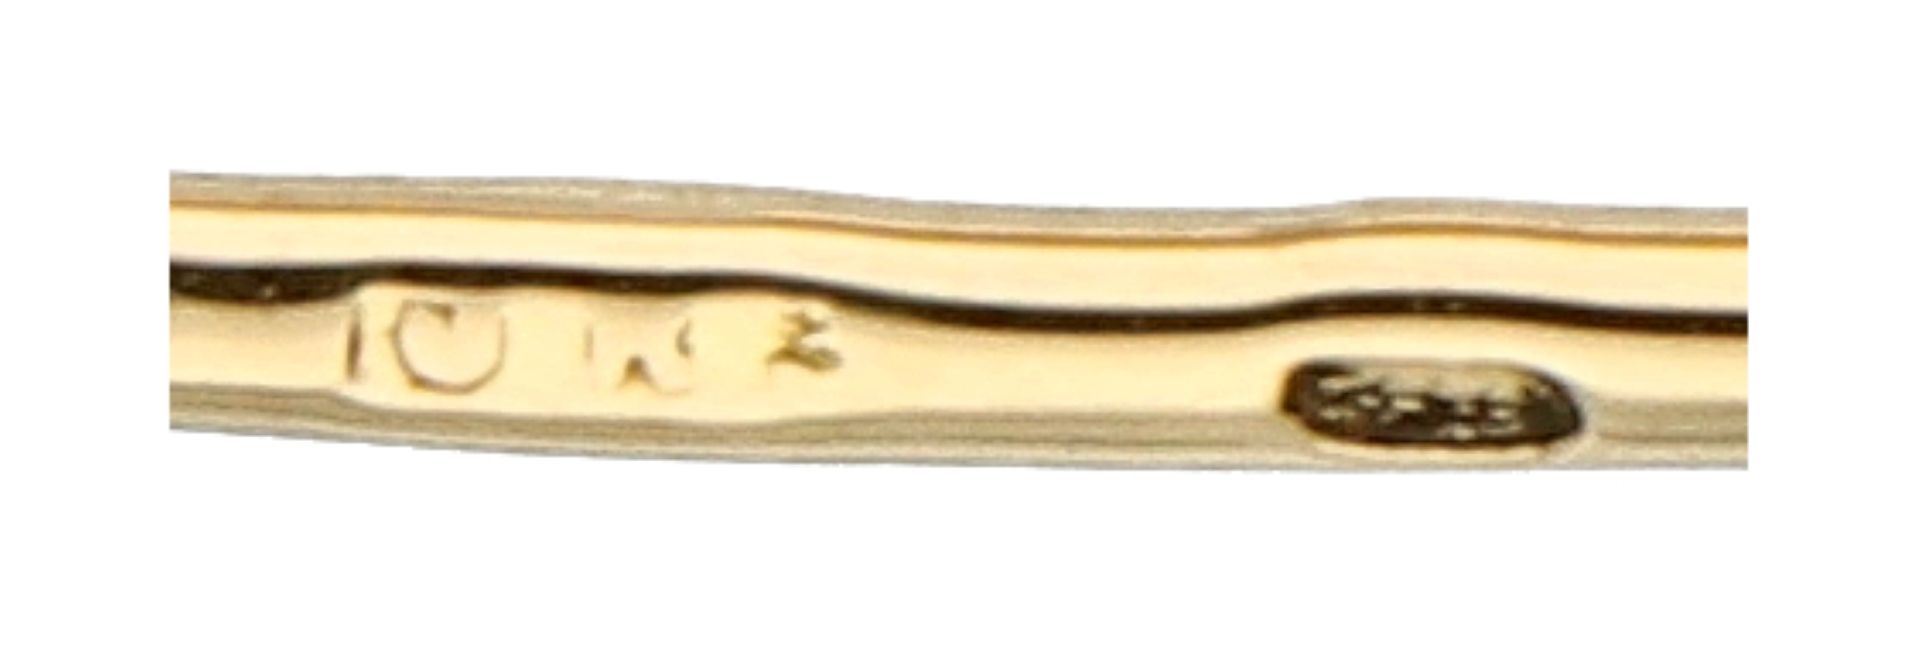 No Reserve - 14K Yellow gold Art Deco bar brooch diamond. - Image 6 of 6